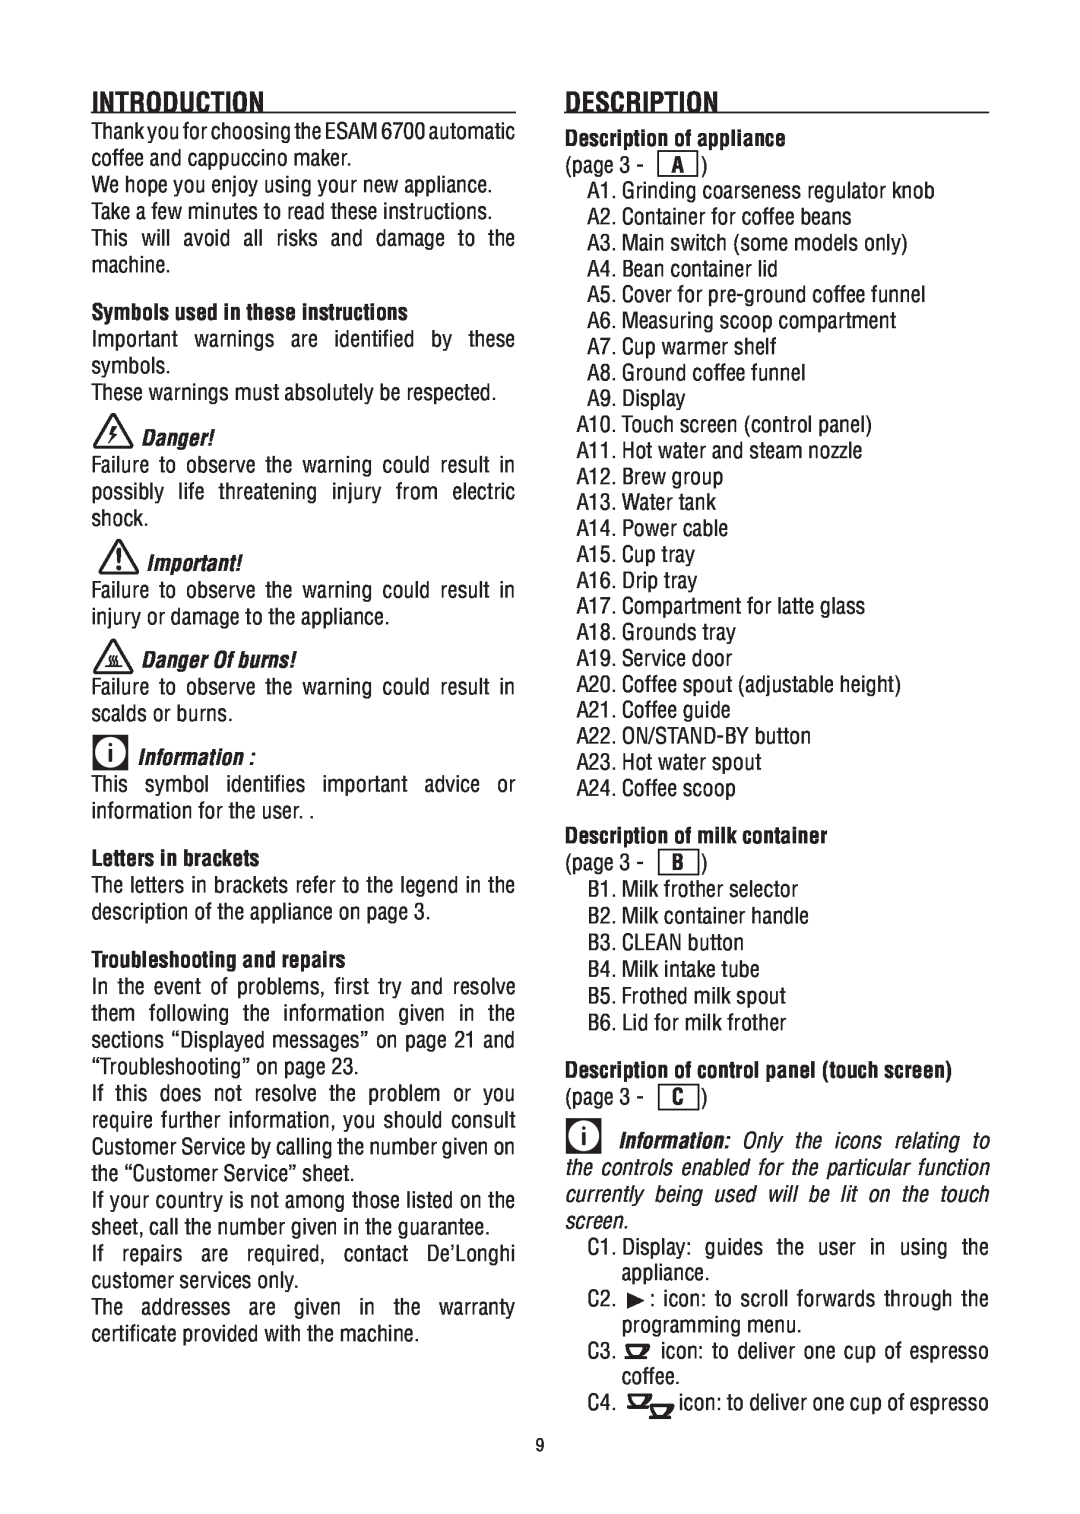 DeLonghi ESAM6700 manual Introduction, Description, Symbols used in these instructions, Danger Of burns, Information 